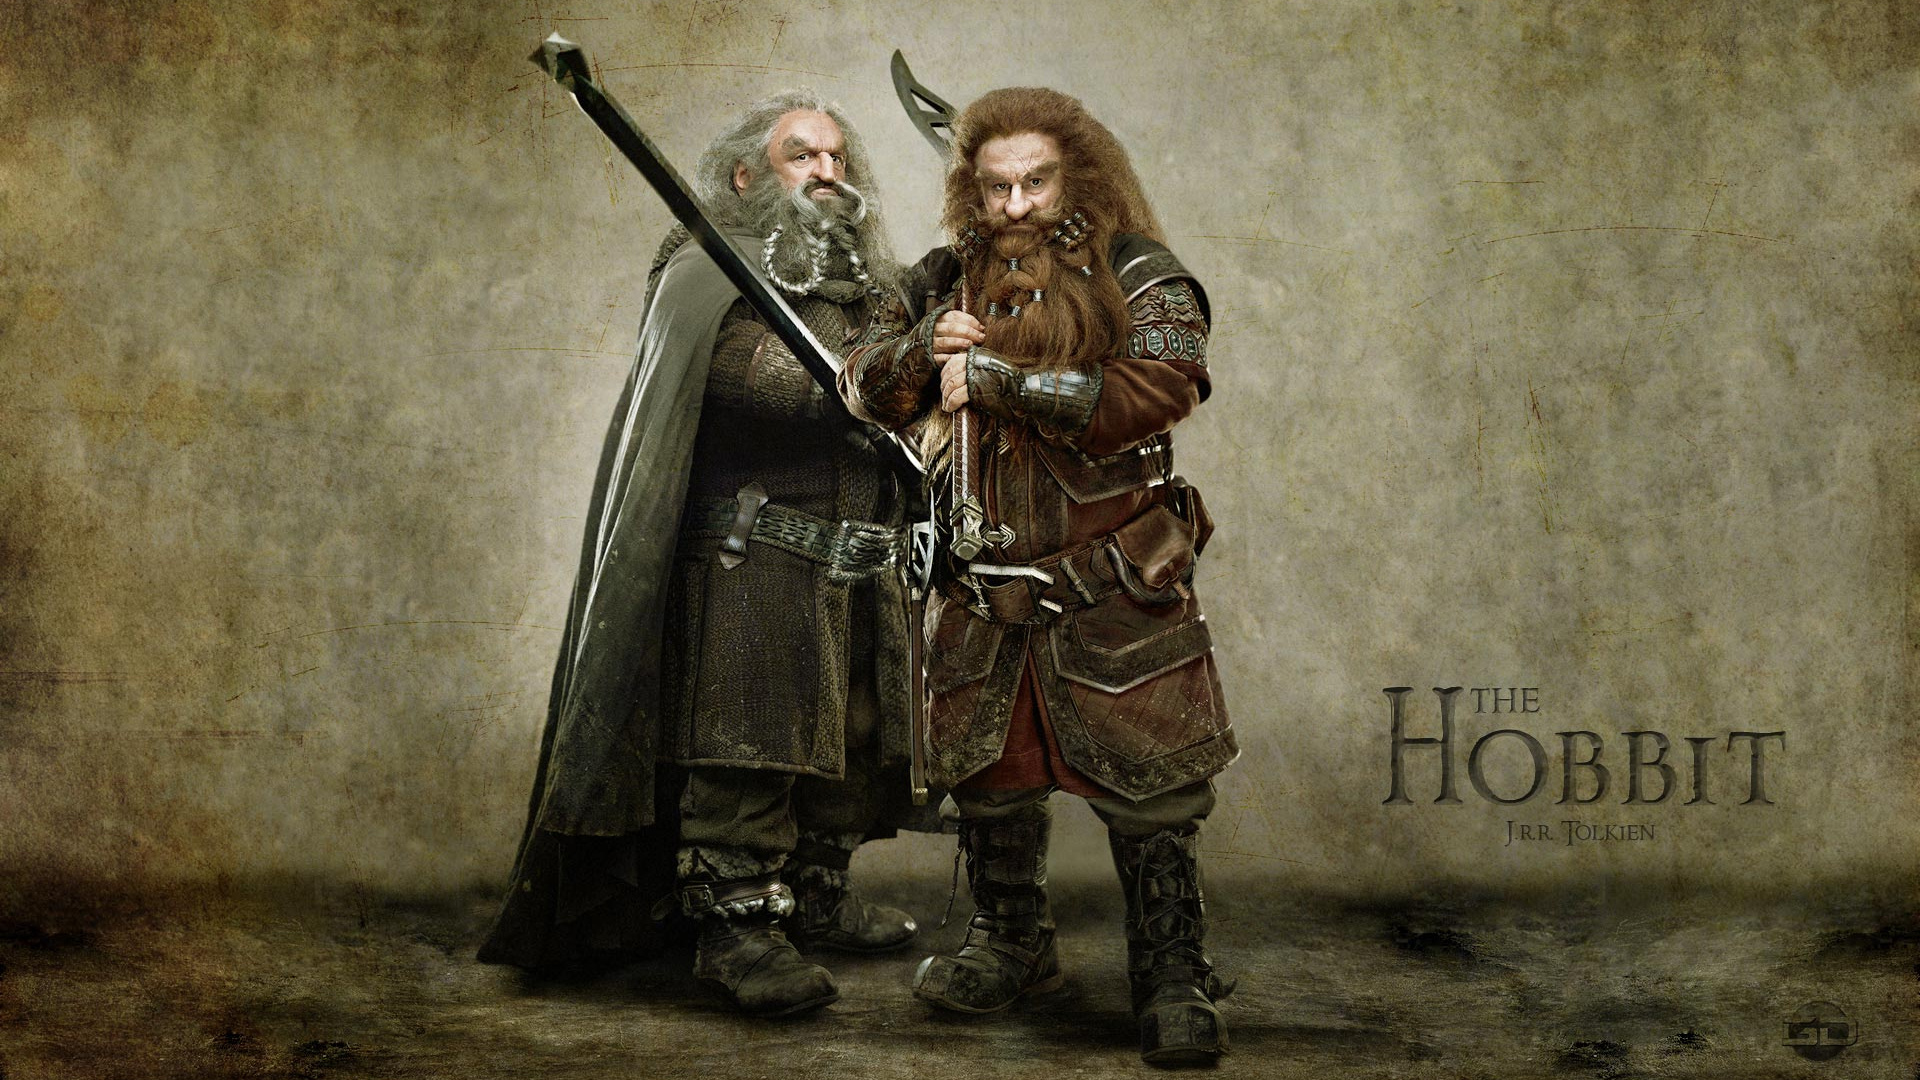 The Hobbit (Movie): Gloin, Oin, The Dwarves of Thorin II Oakenshield's company. 1920x1080 Full HD Wallpaper.